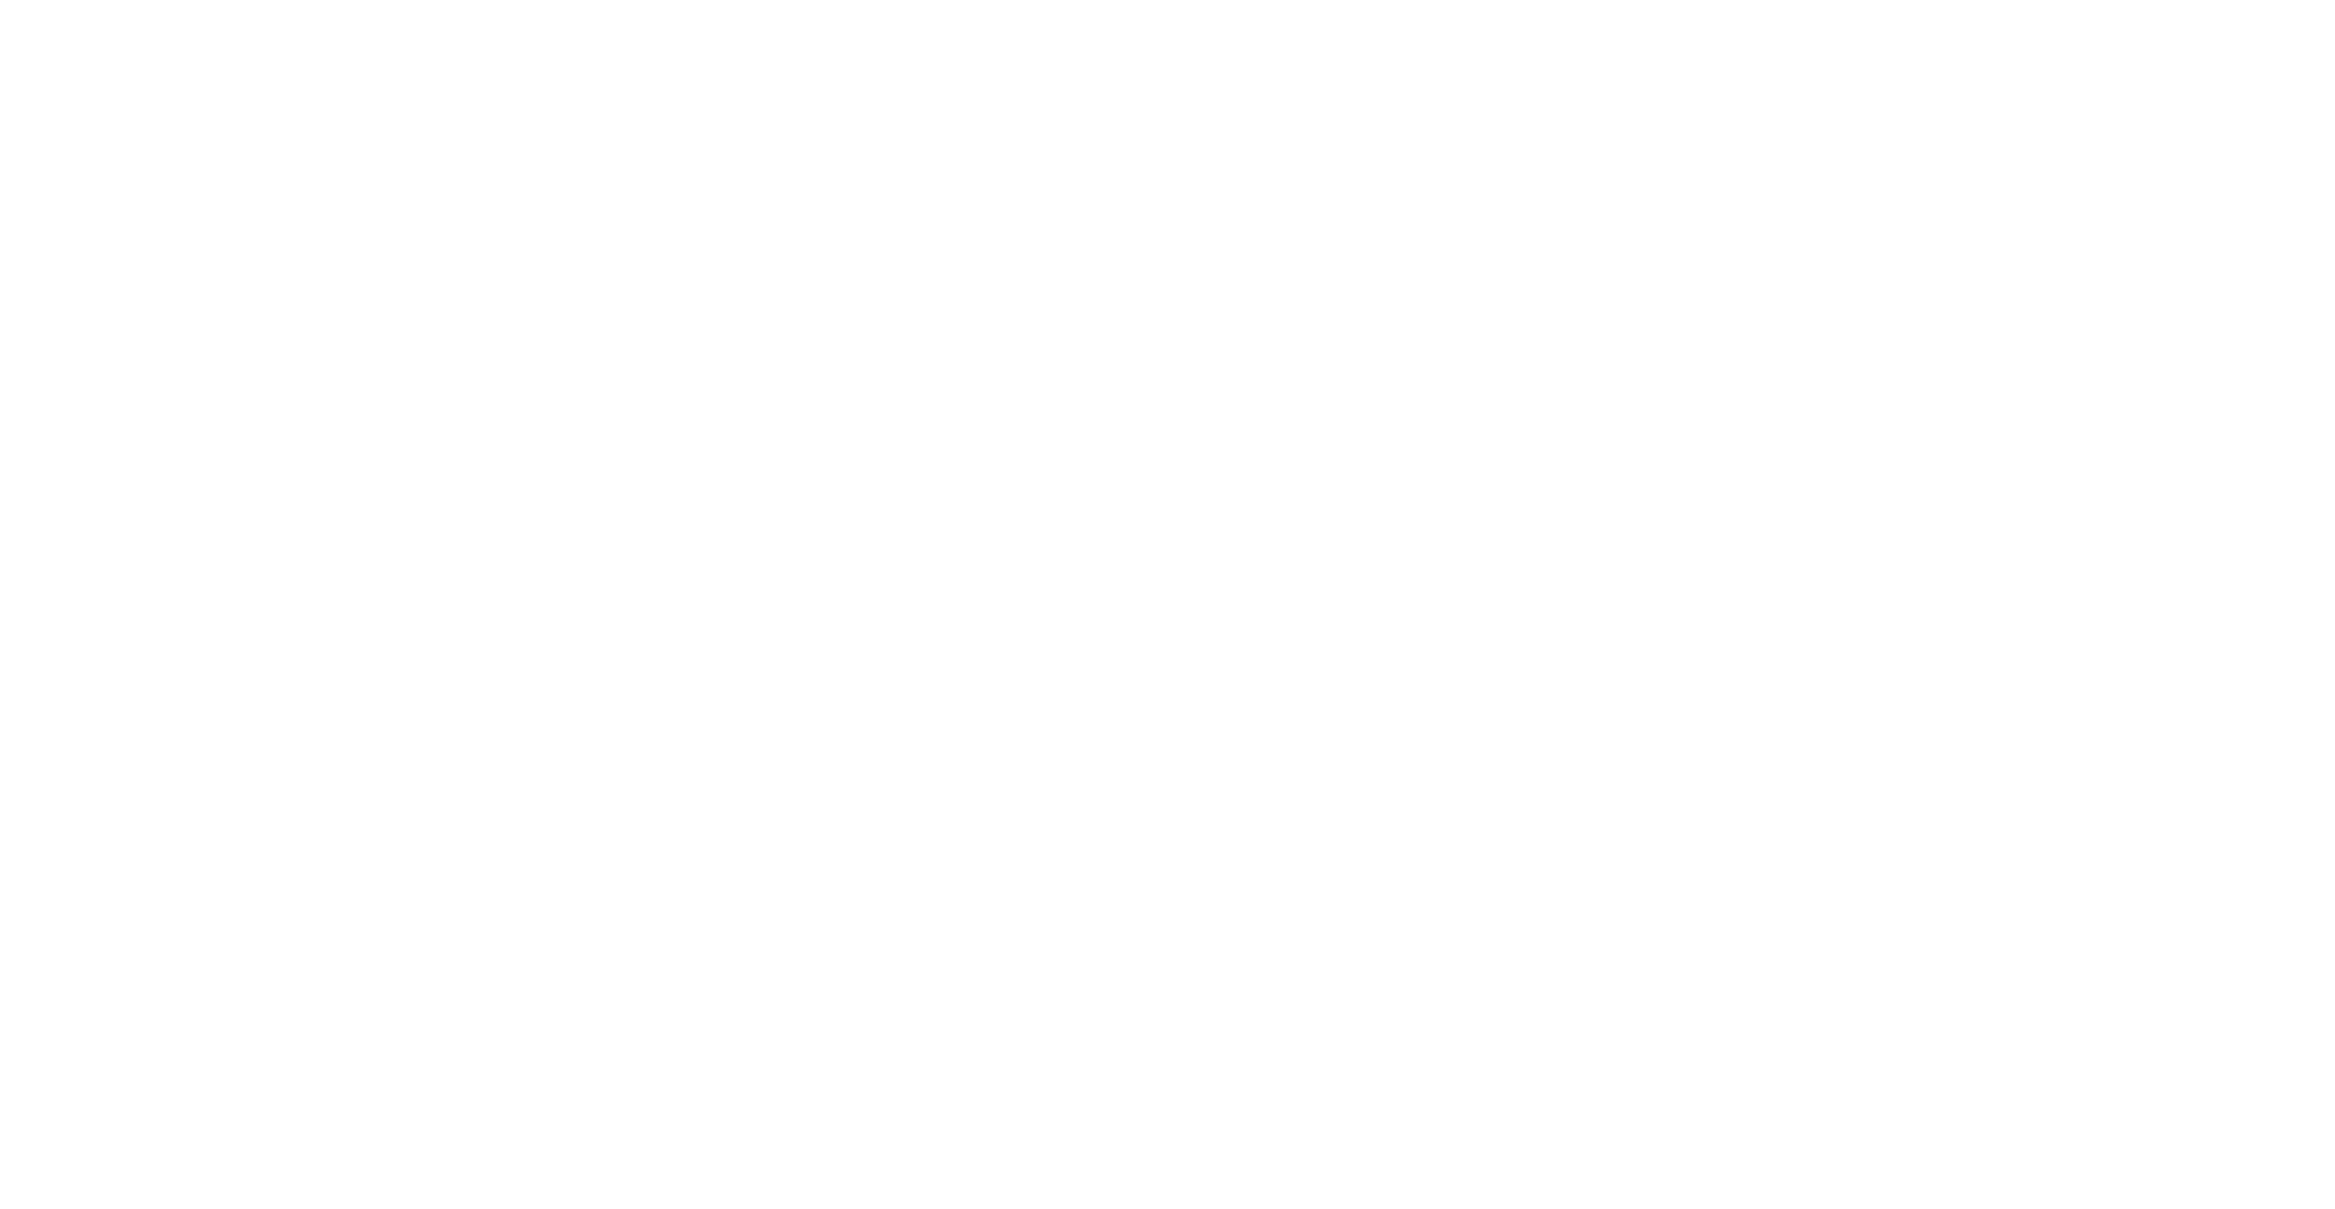 Blured Digital Technologies